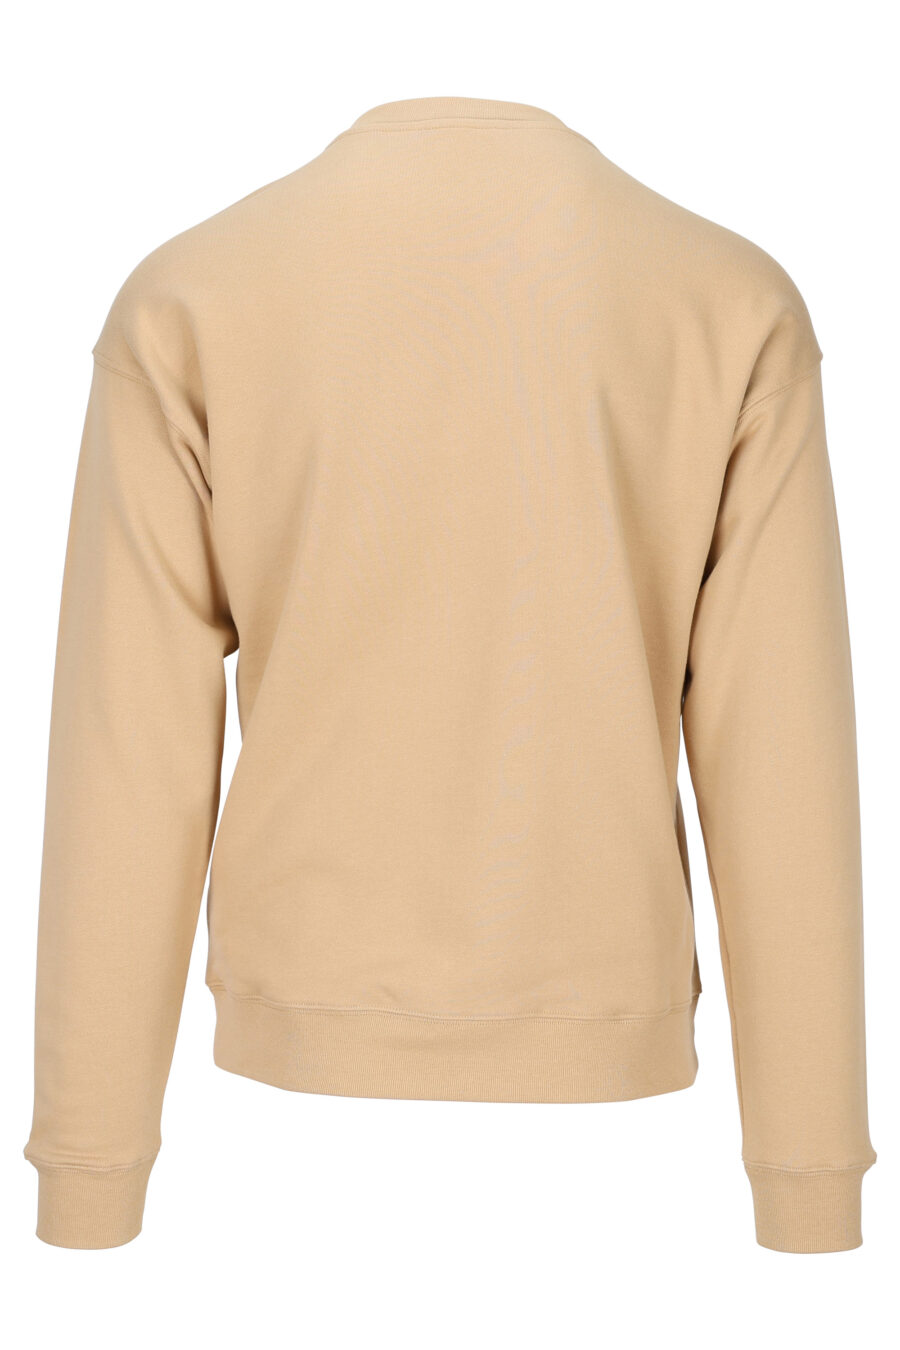 Beige sweatshirt with black maxilogue - 889316943955 1